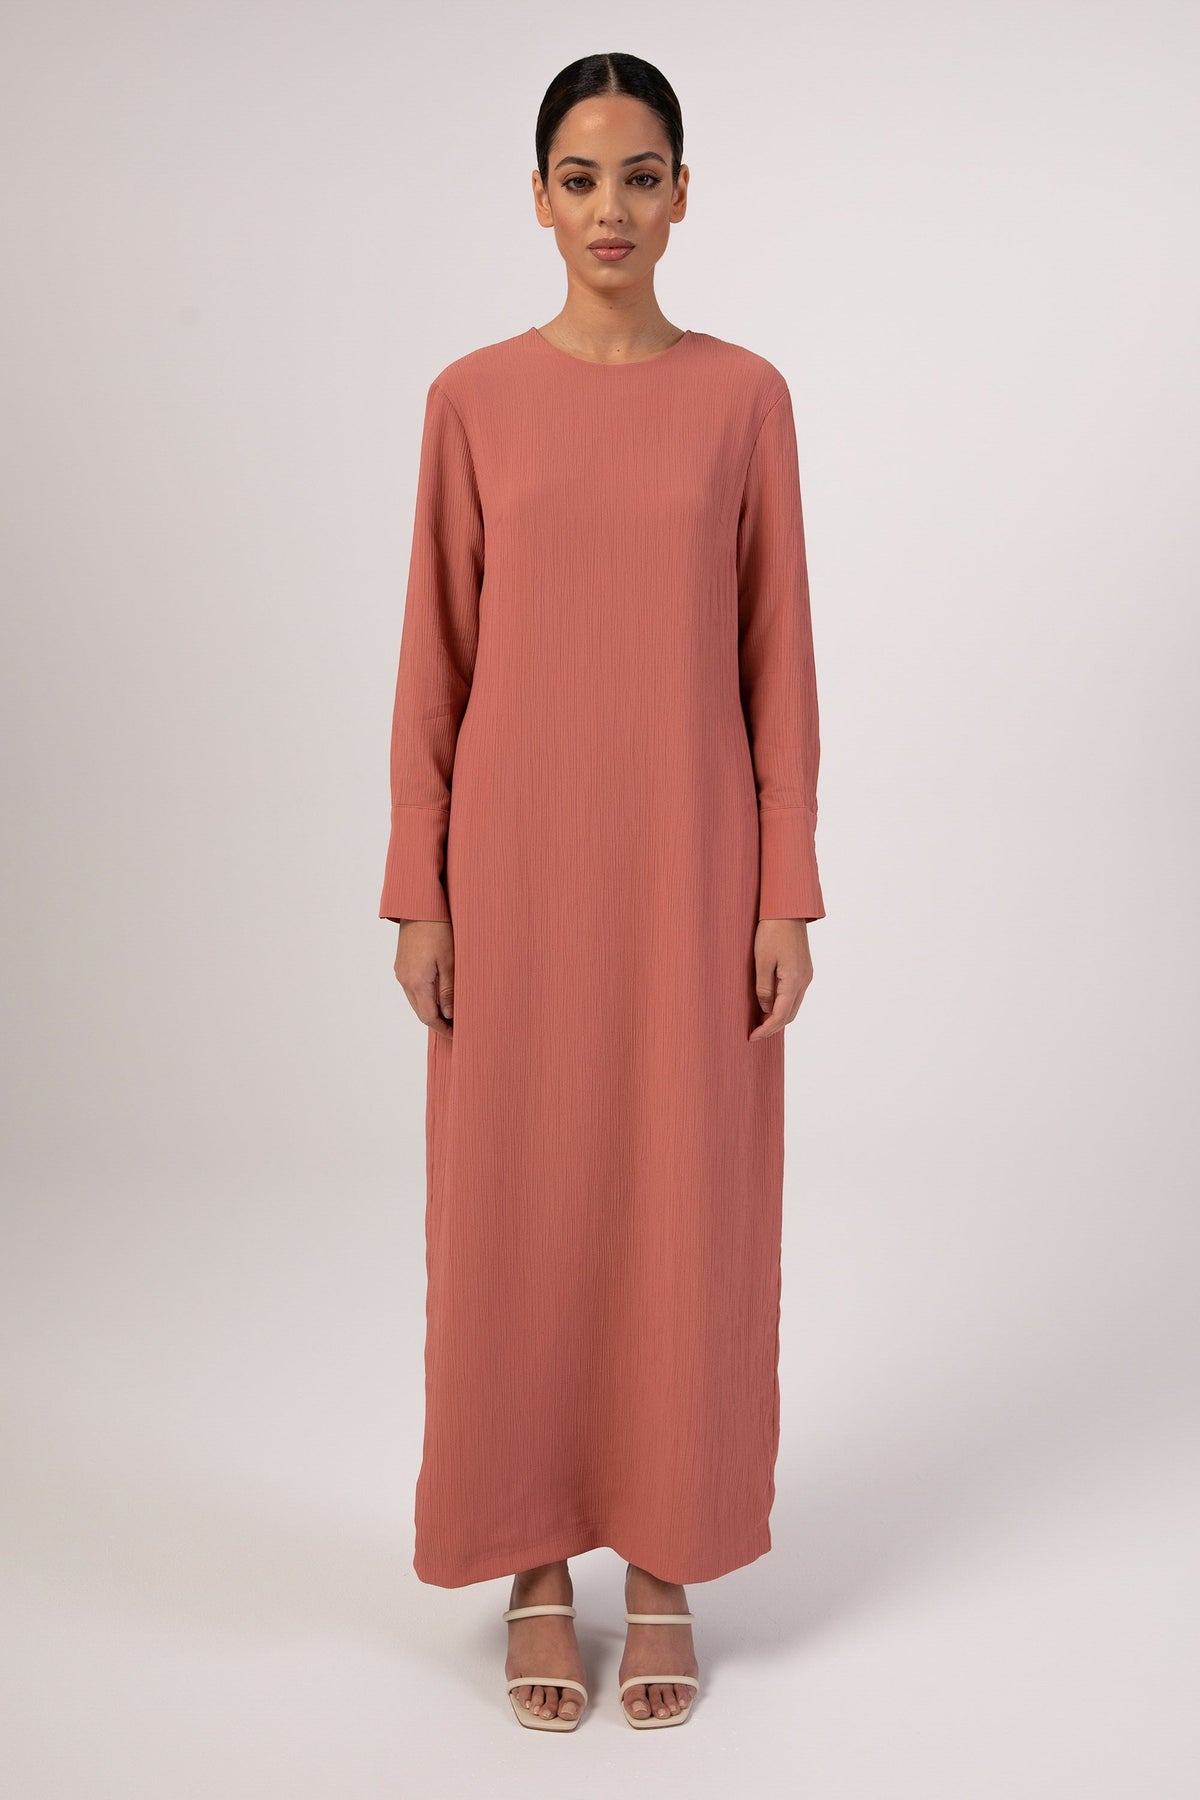 Sajda Textured Maxi Dress - Terracotta Veiled 